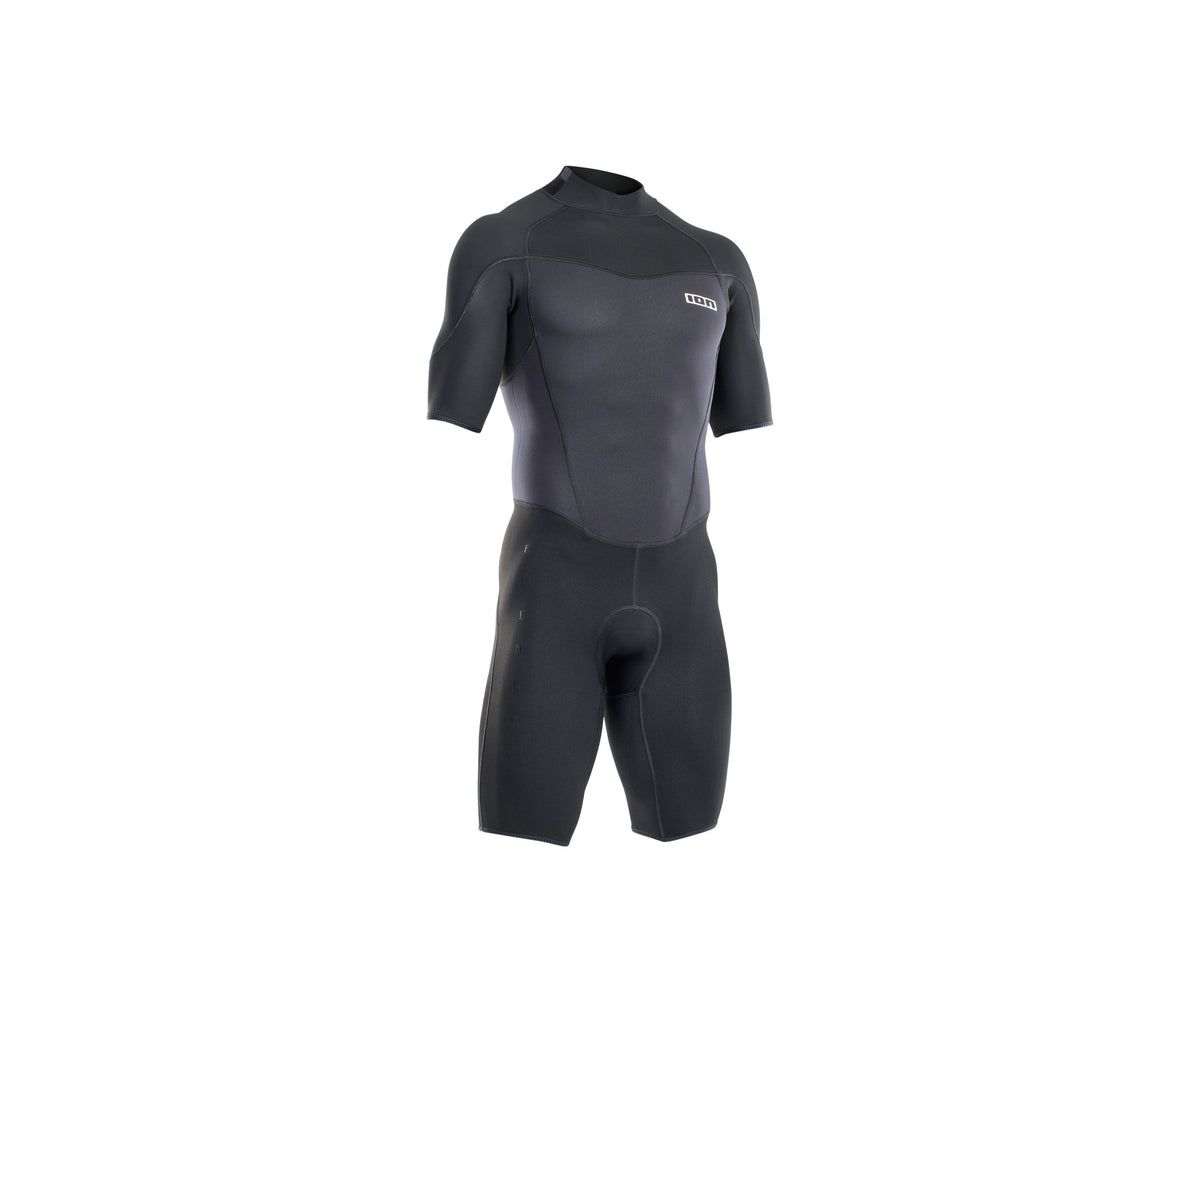 ION ELEMENT 2/2 SHORTY BLACK summer wetsuit